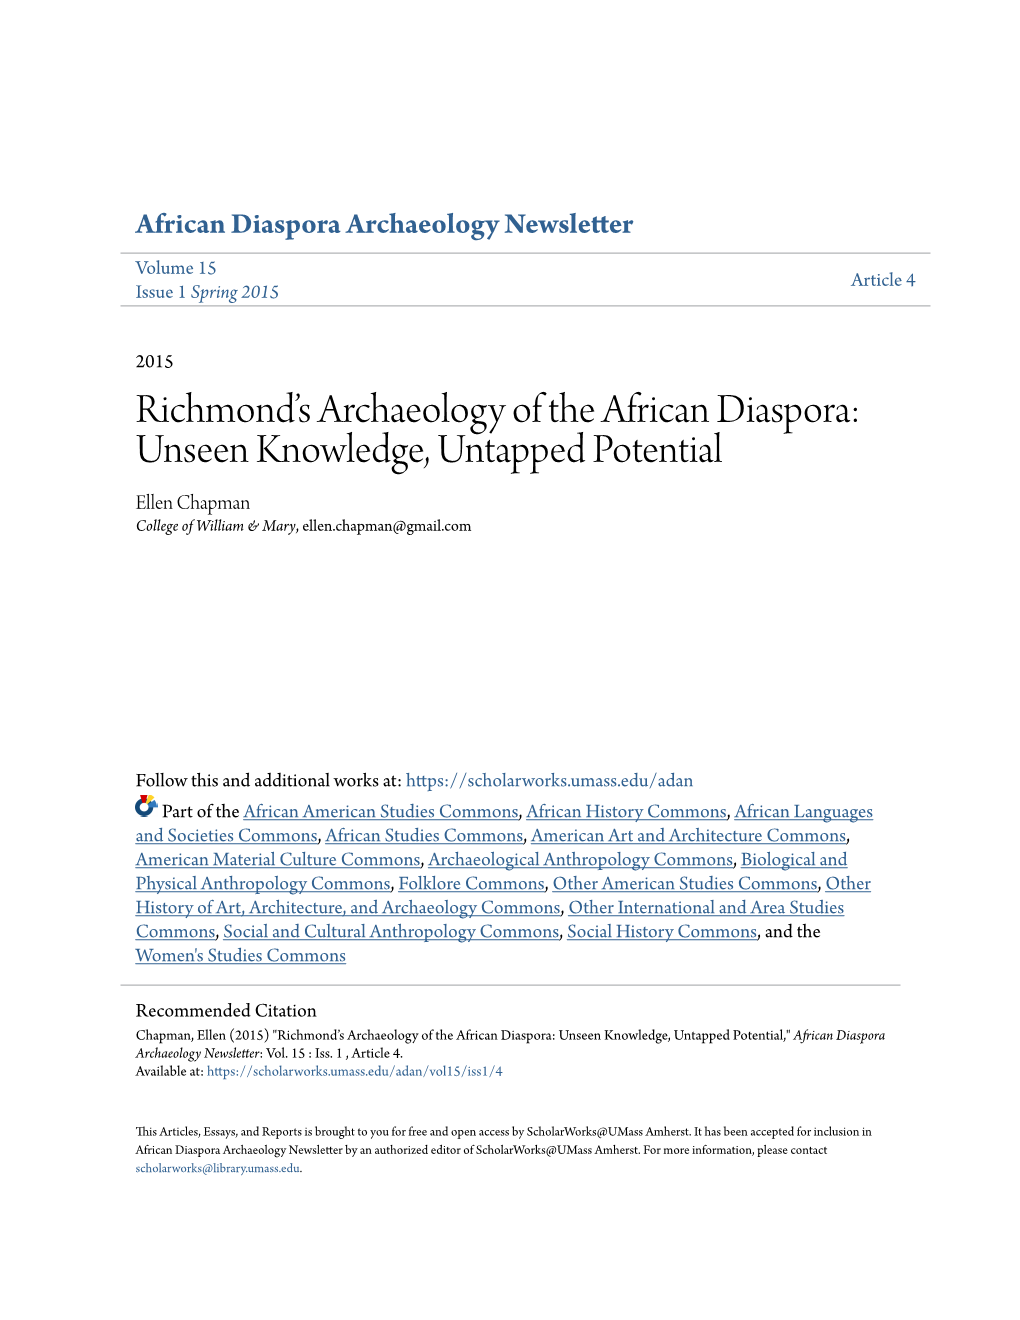 Richmond's Archaeology of the African Diaspora